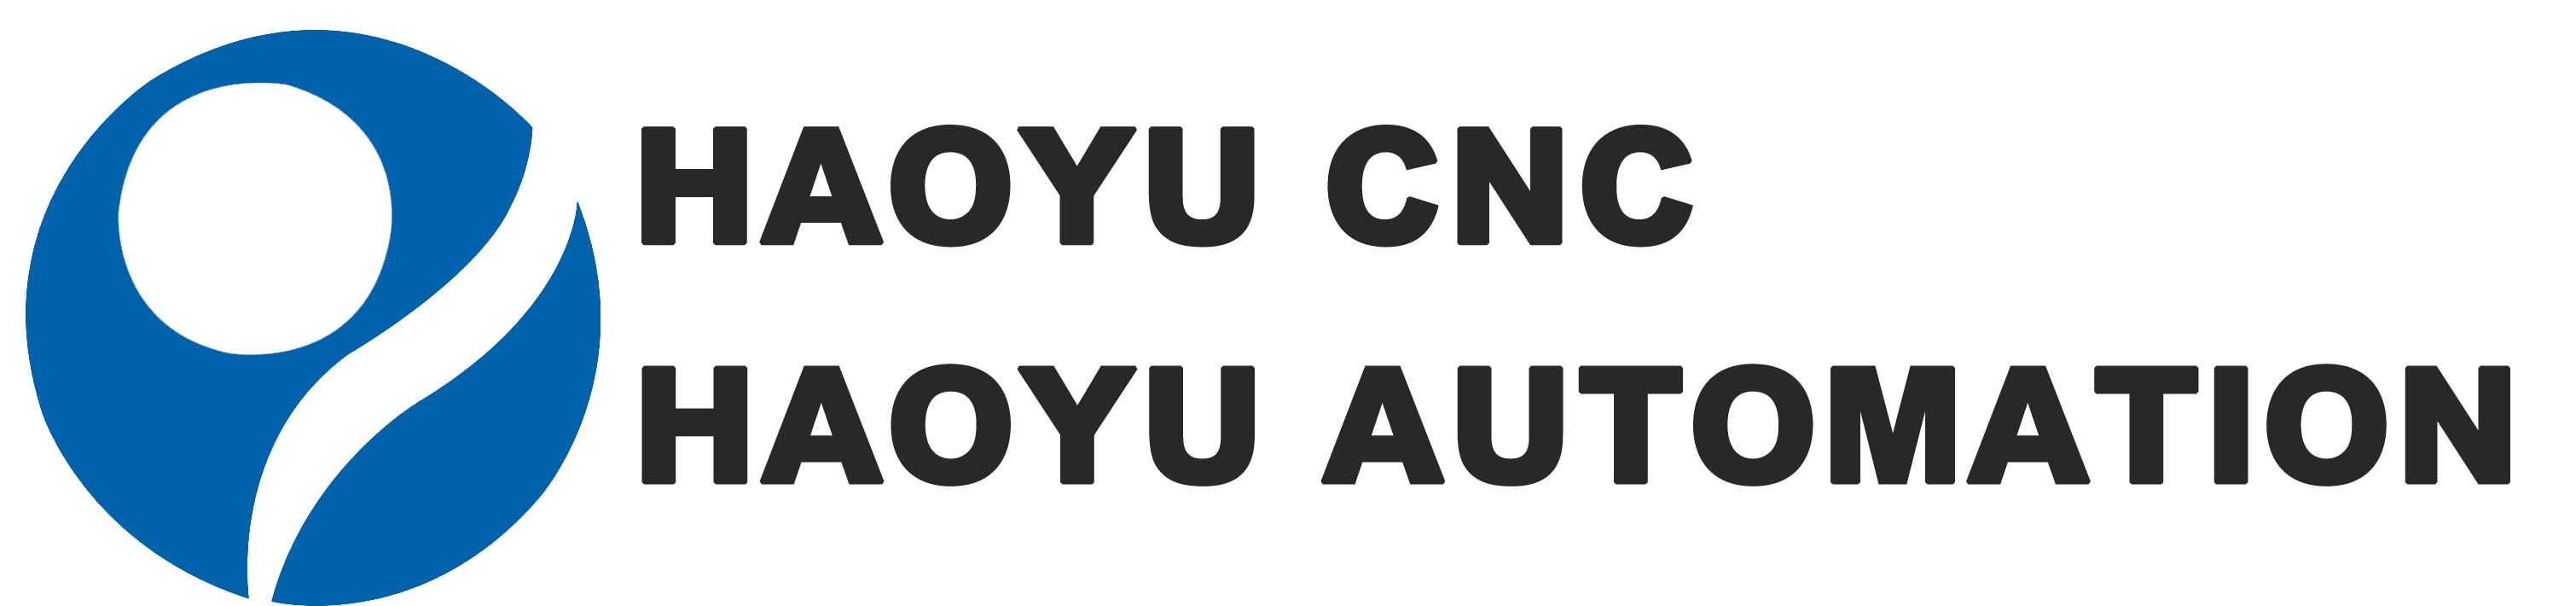 Jinan Haoyu Automation System Co., Ltd logo